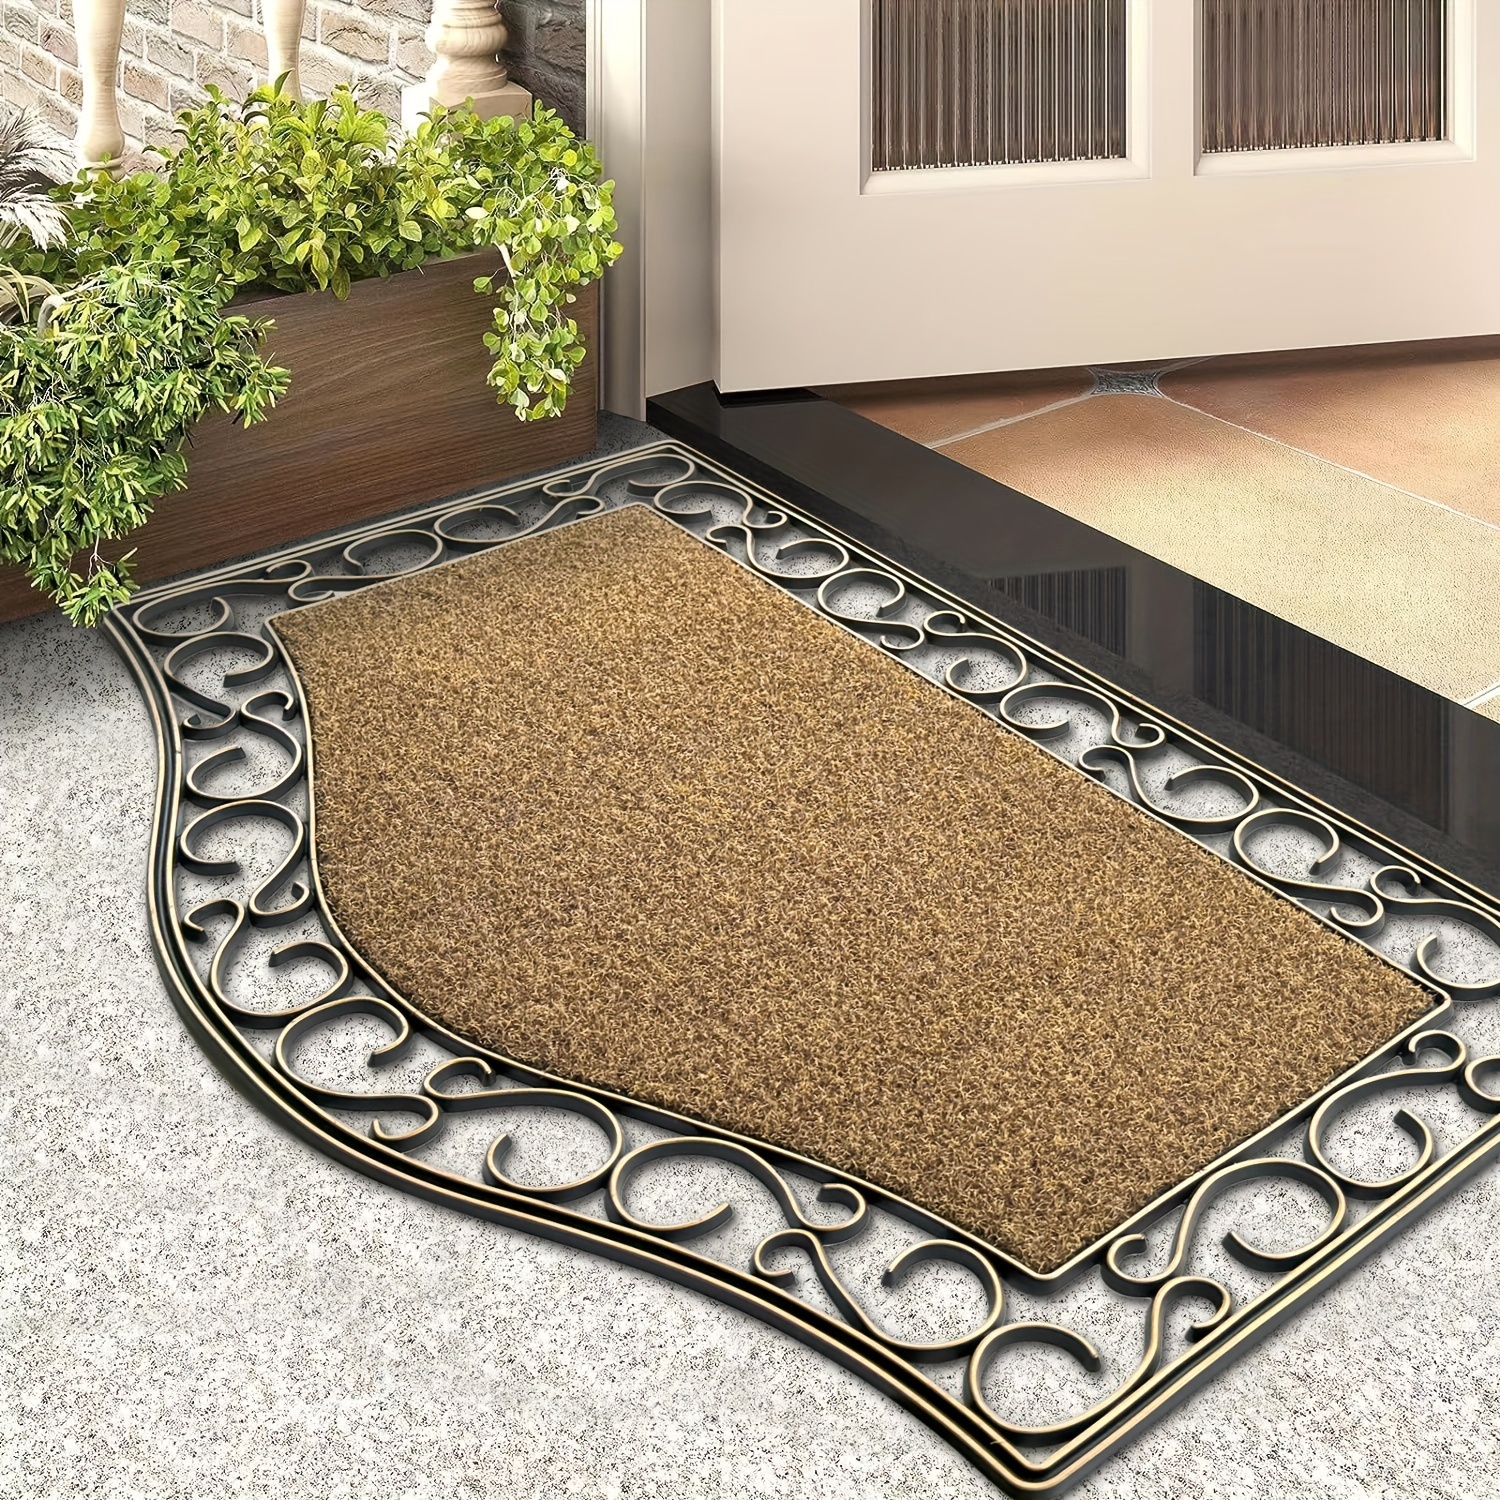 

Water-absorbent & Slip-resistant Outdoor Mat, 18"x30", Pvc With Anti-deform Design - Perfect For Festive Doorways & Patios